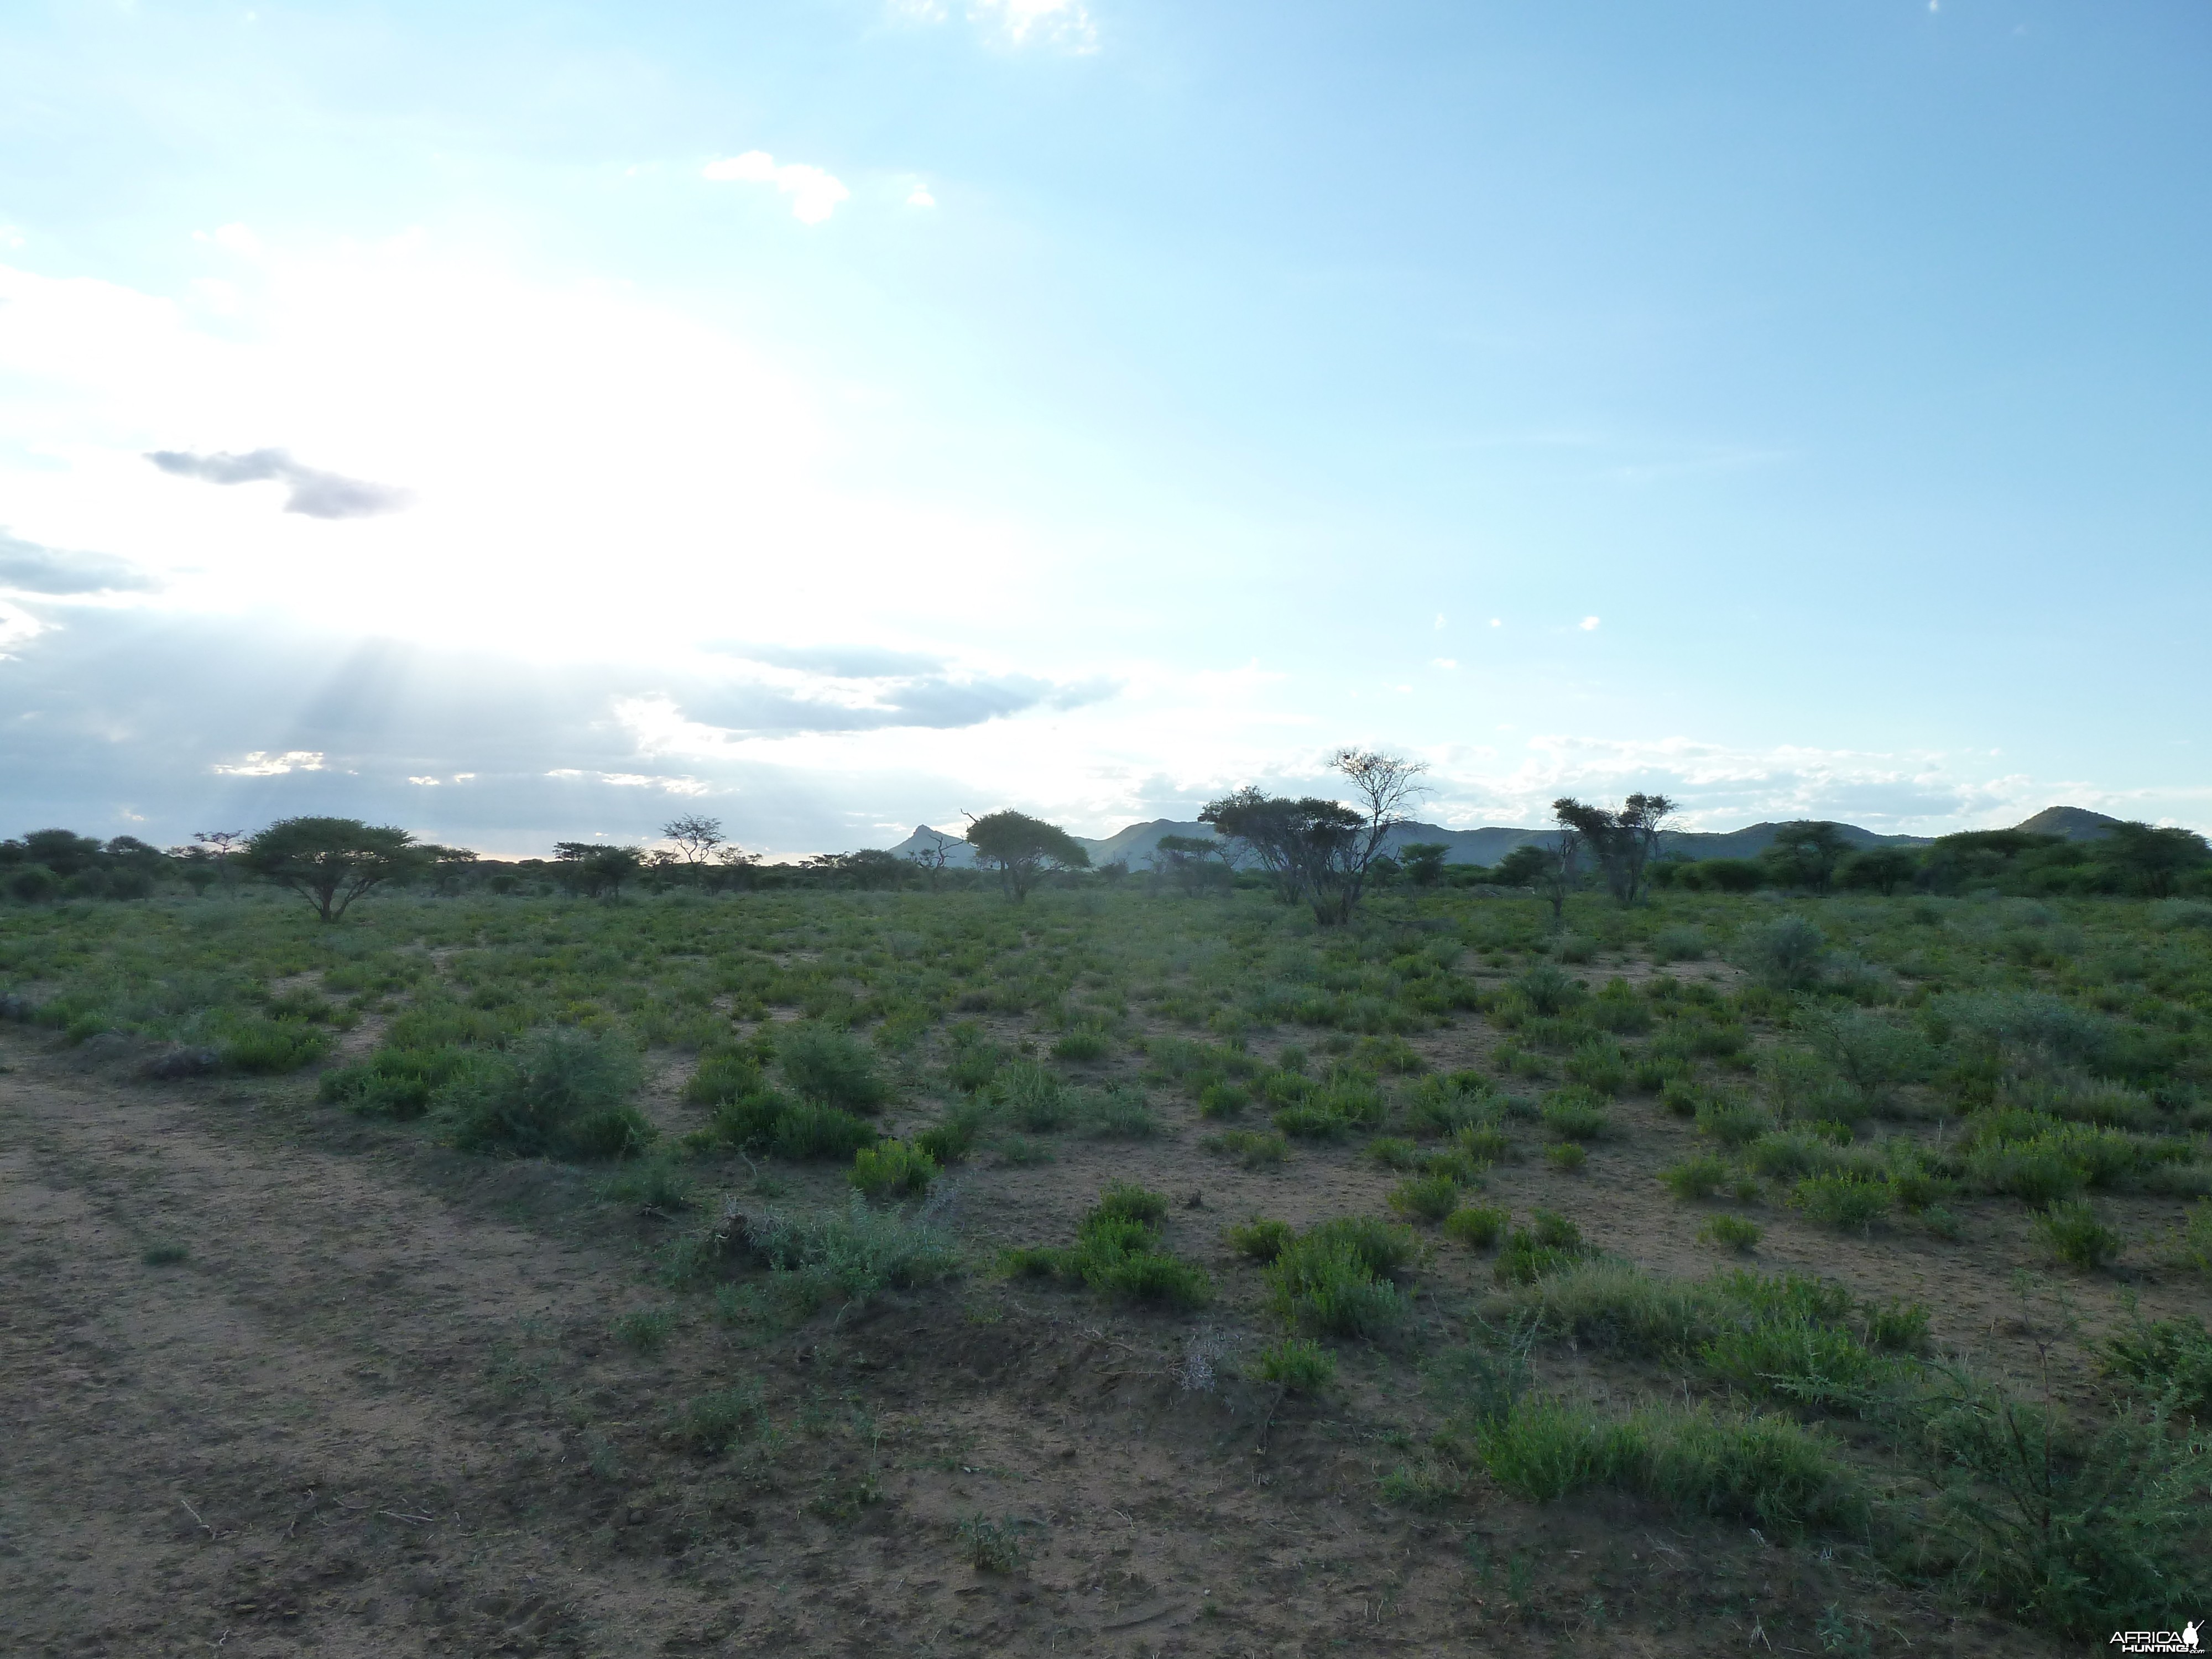 Hunting at Ozondjahe in Namibia